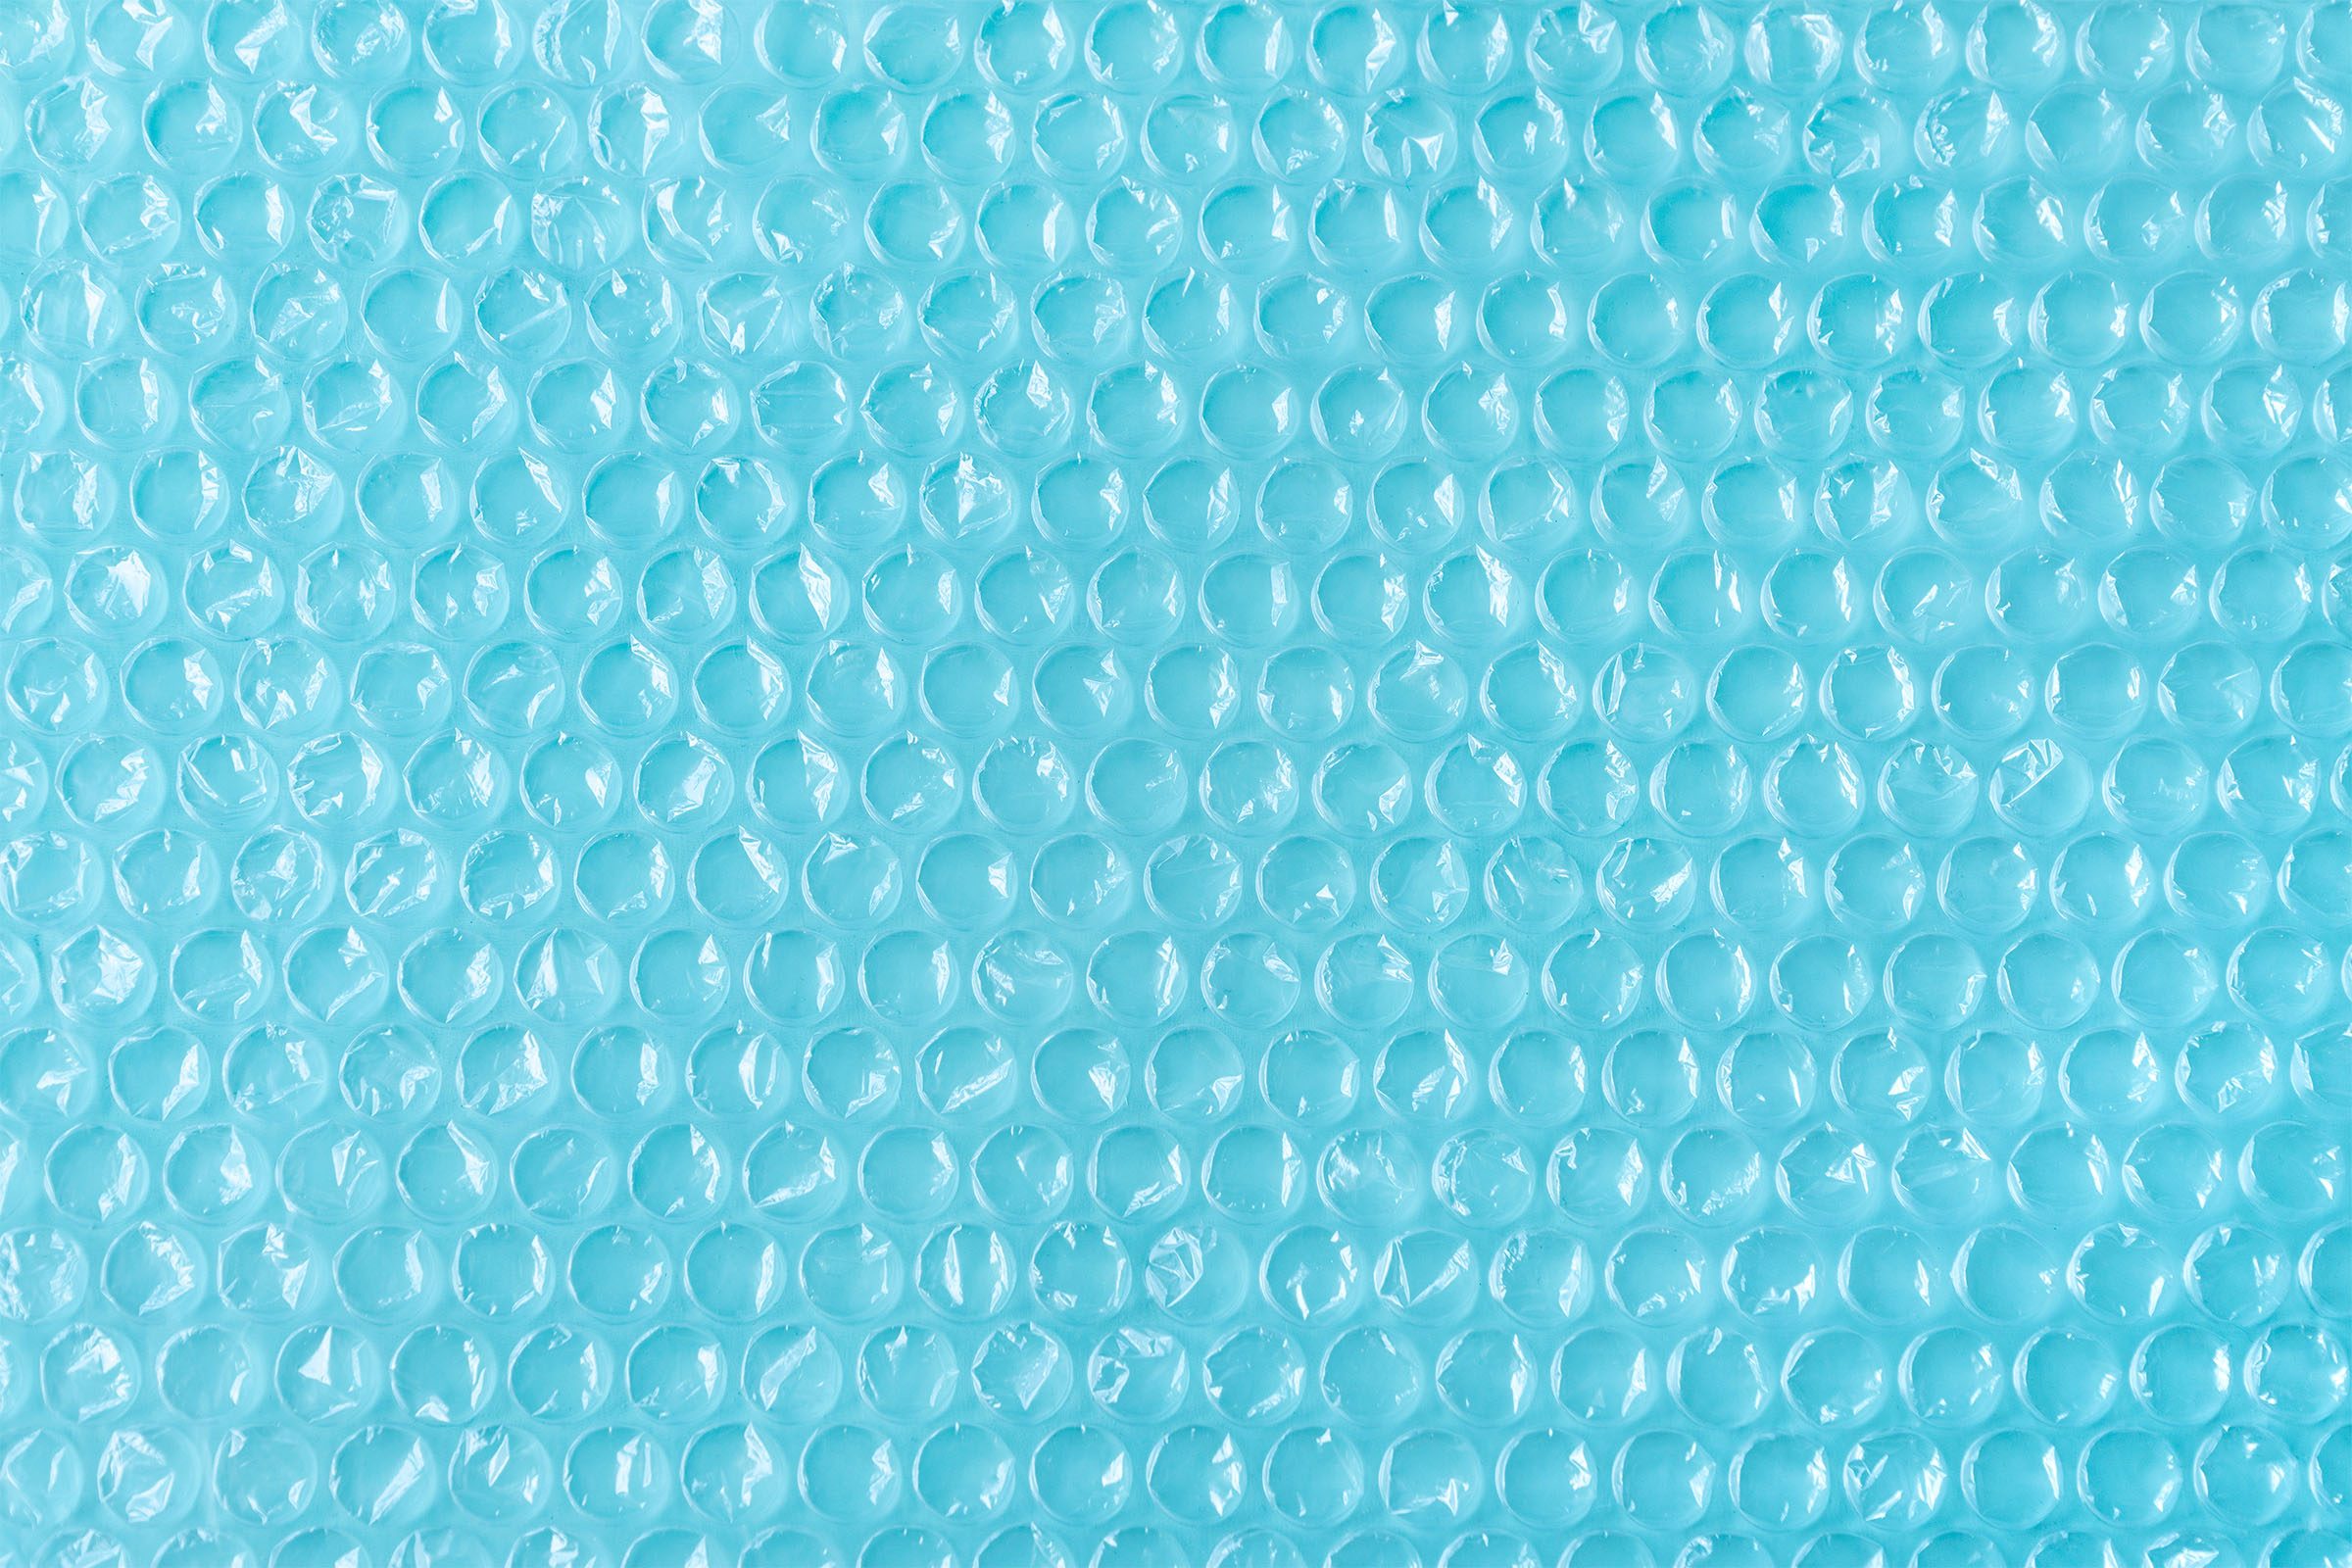 How It's Made: Bubble Wrap — Katzke Packaging Co.